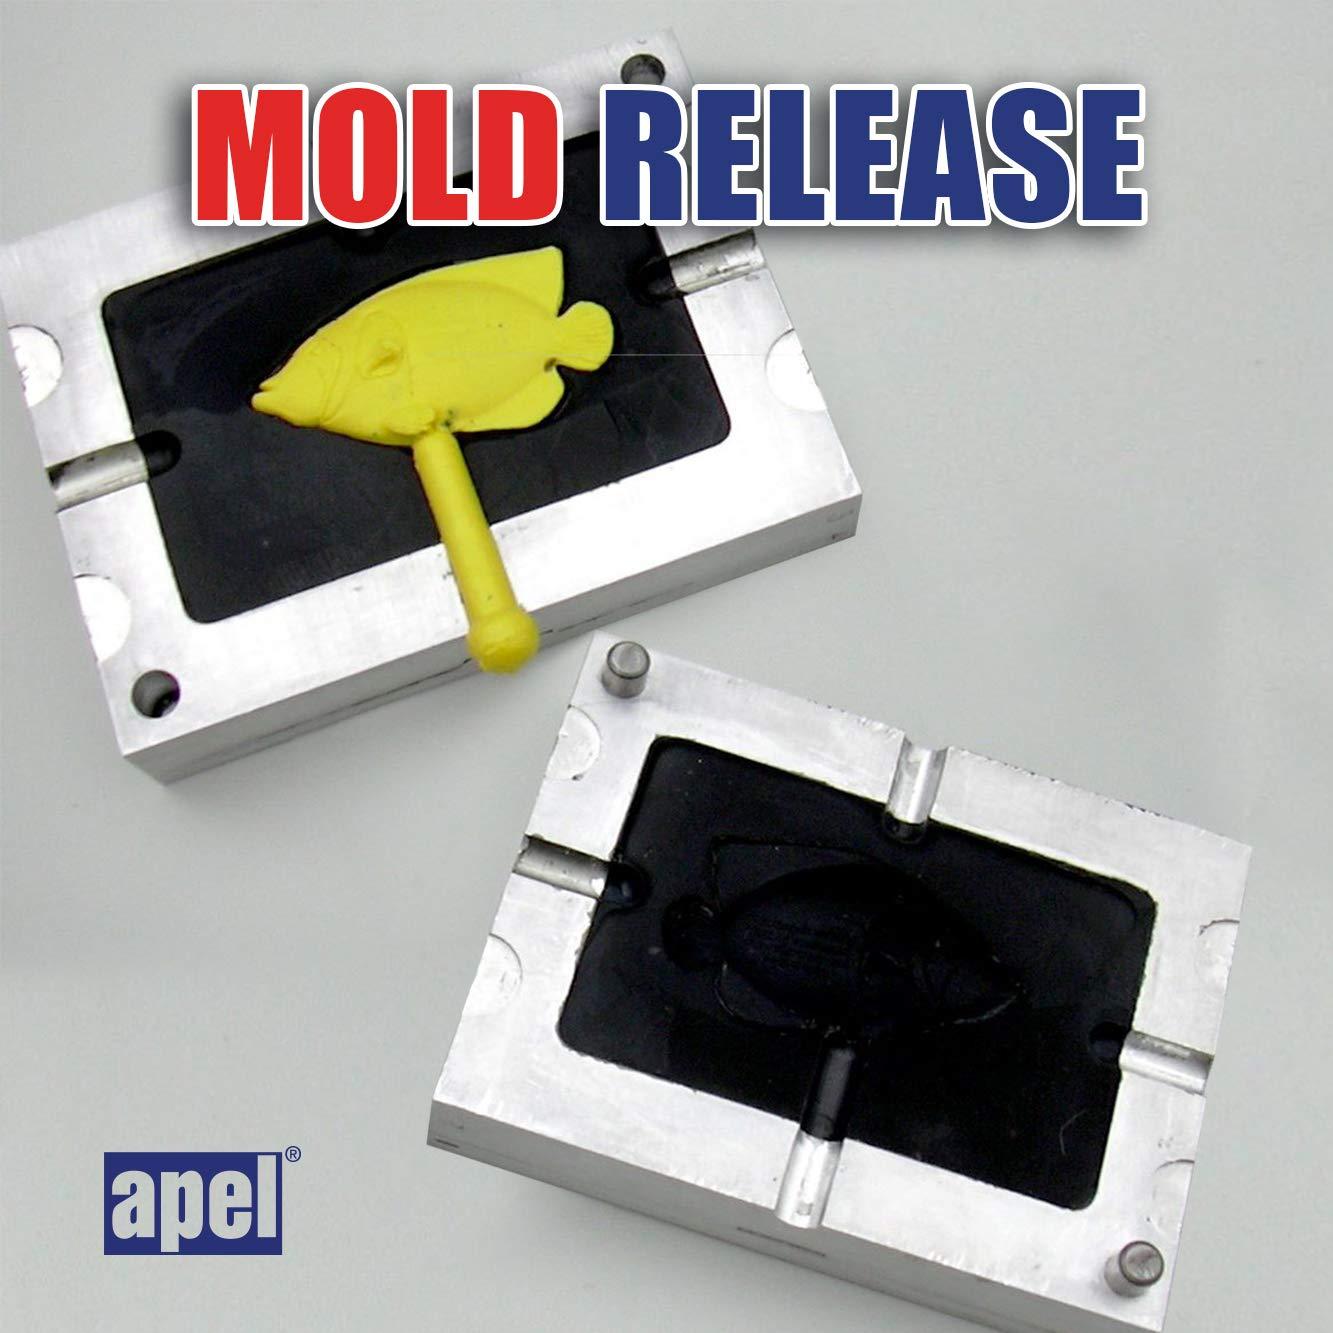  mitreapel Silicone Mold Release Spray (14.4 oz) Release Agent Aerosol  Spray : Arts, Crafts & Sewing